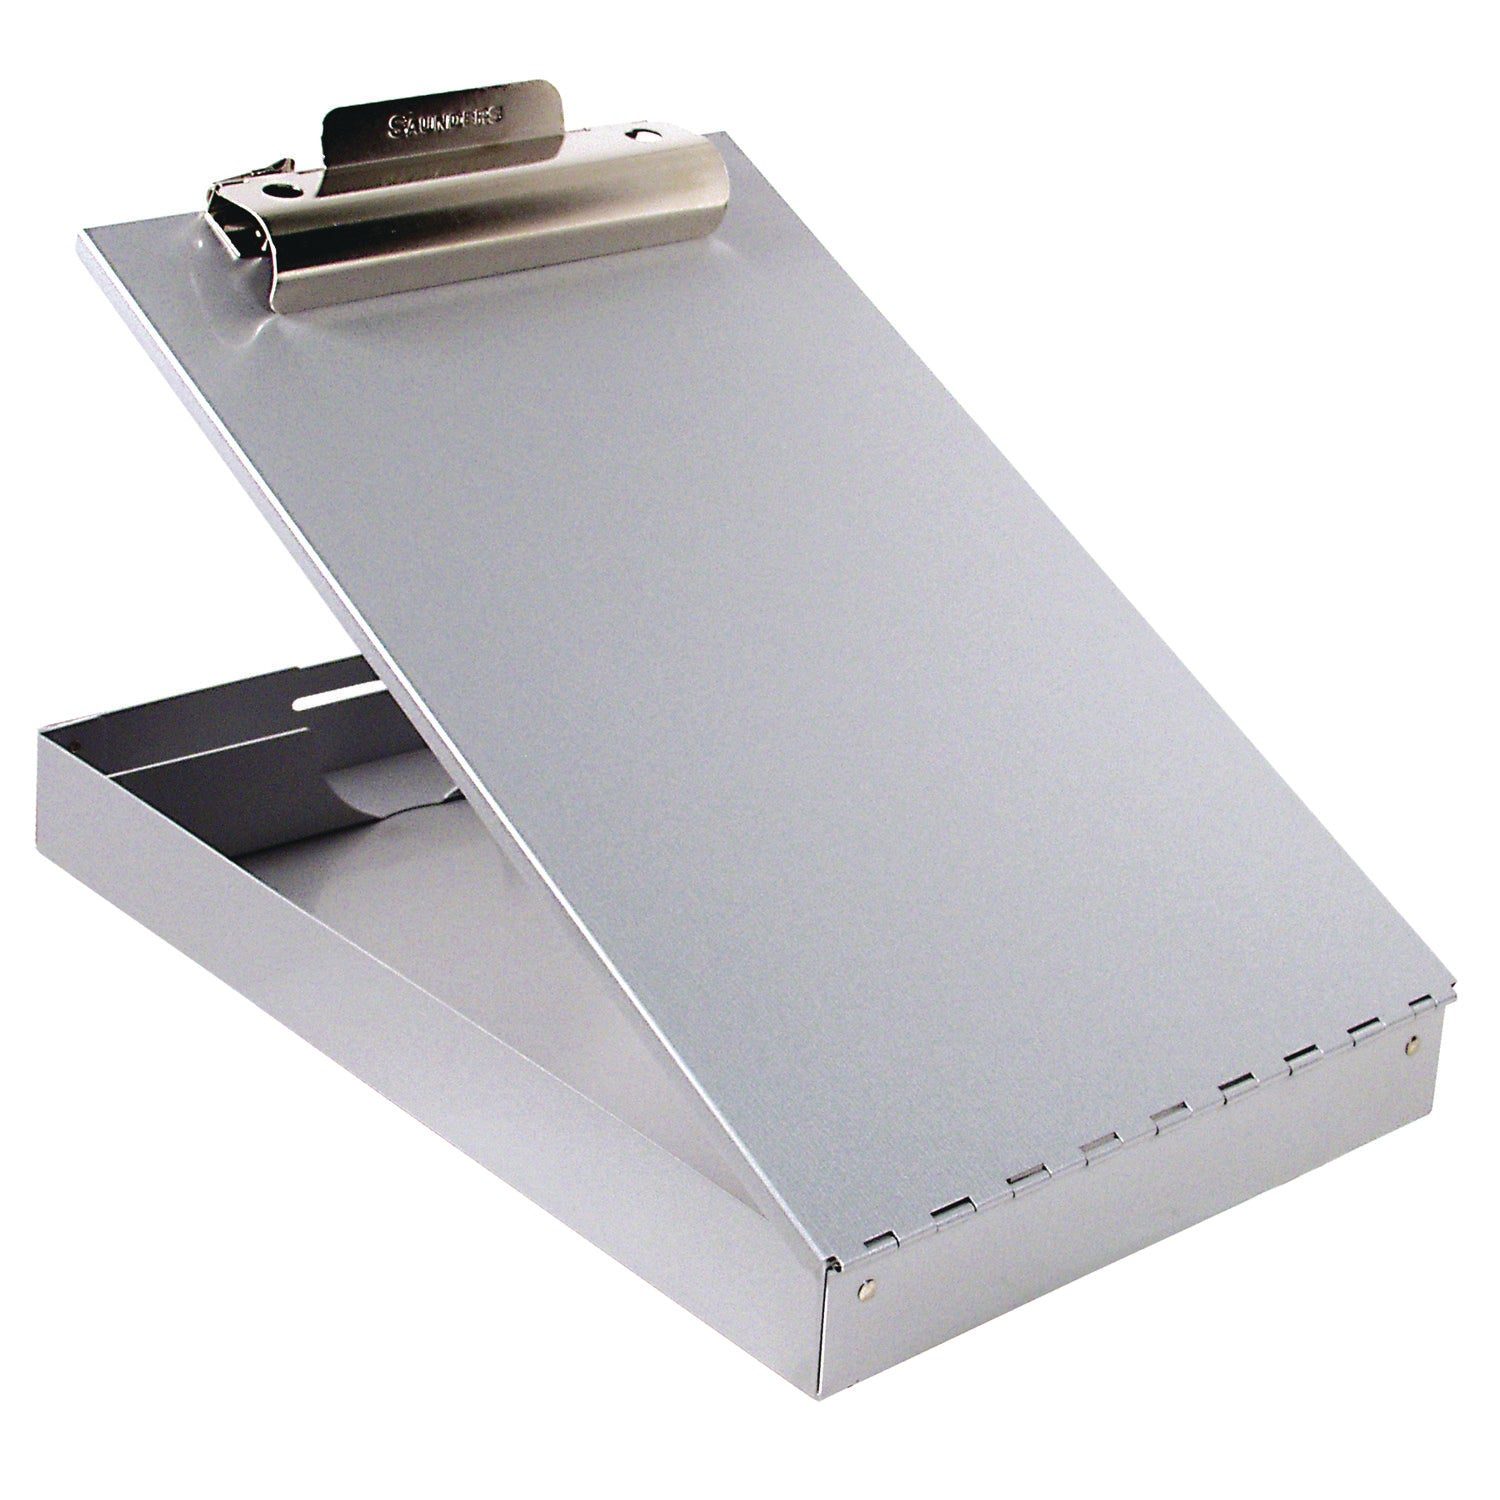 Redi-Rite Aluminum Storage Clipboard, 1" Clip Capacity, Holds 8.5 x 11 Sheets, Silver - 